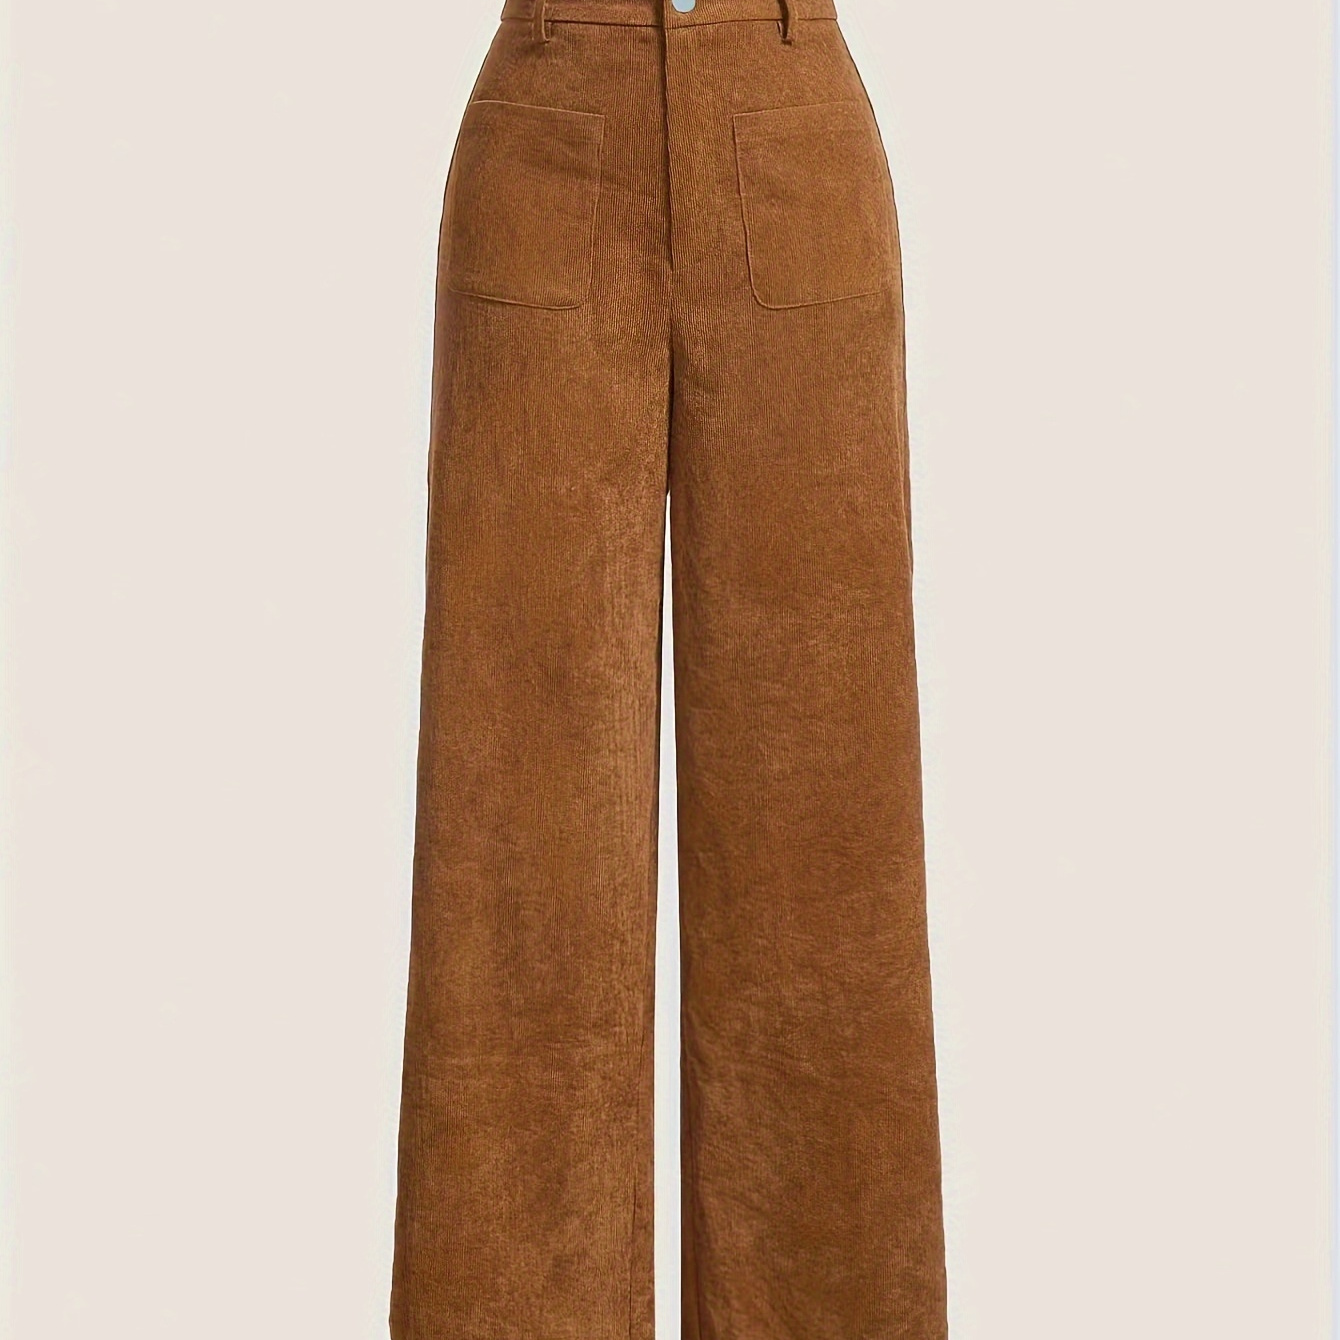 

Corduroy High Waist Pants, Vintage Straight Leg Pants For Spring & Fall, Women's Clothing